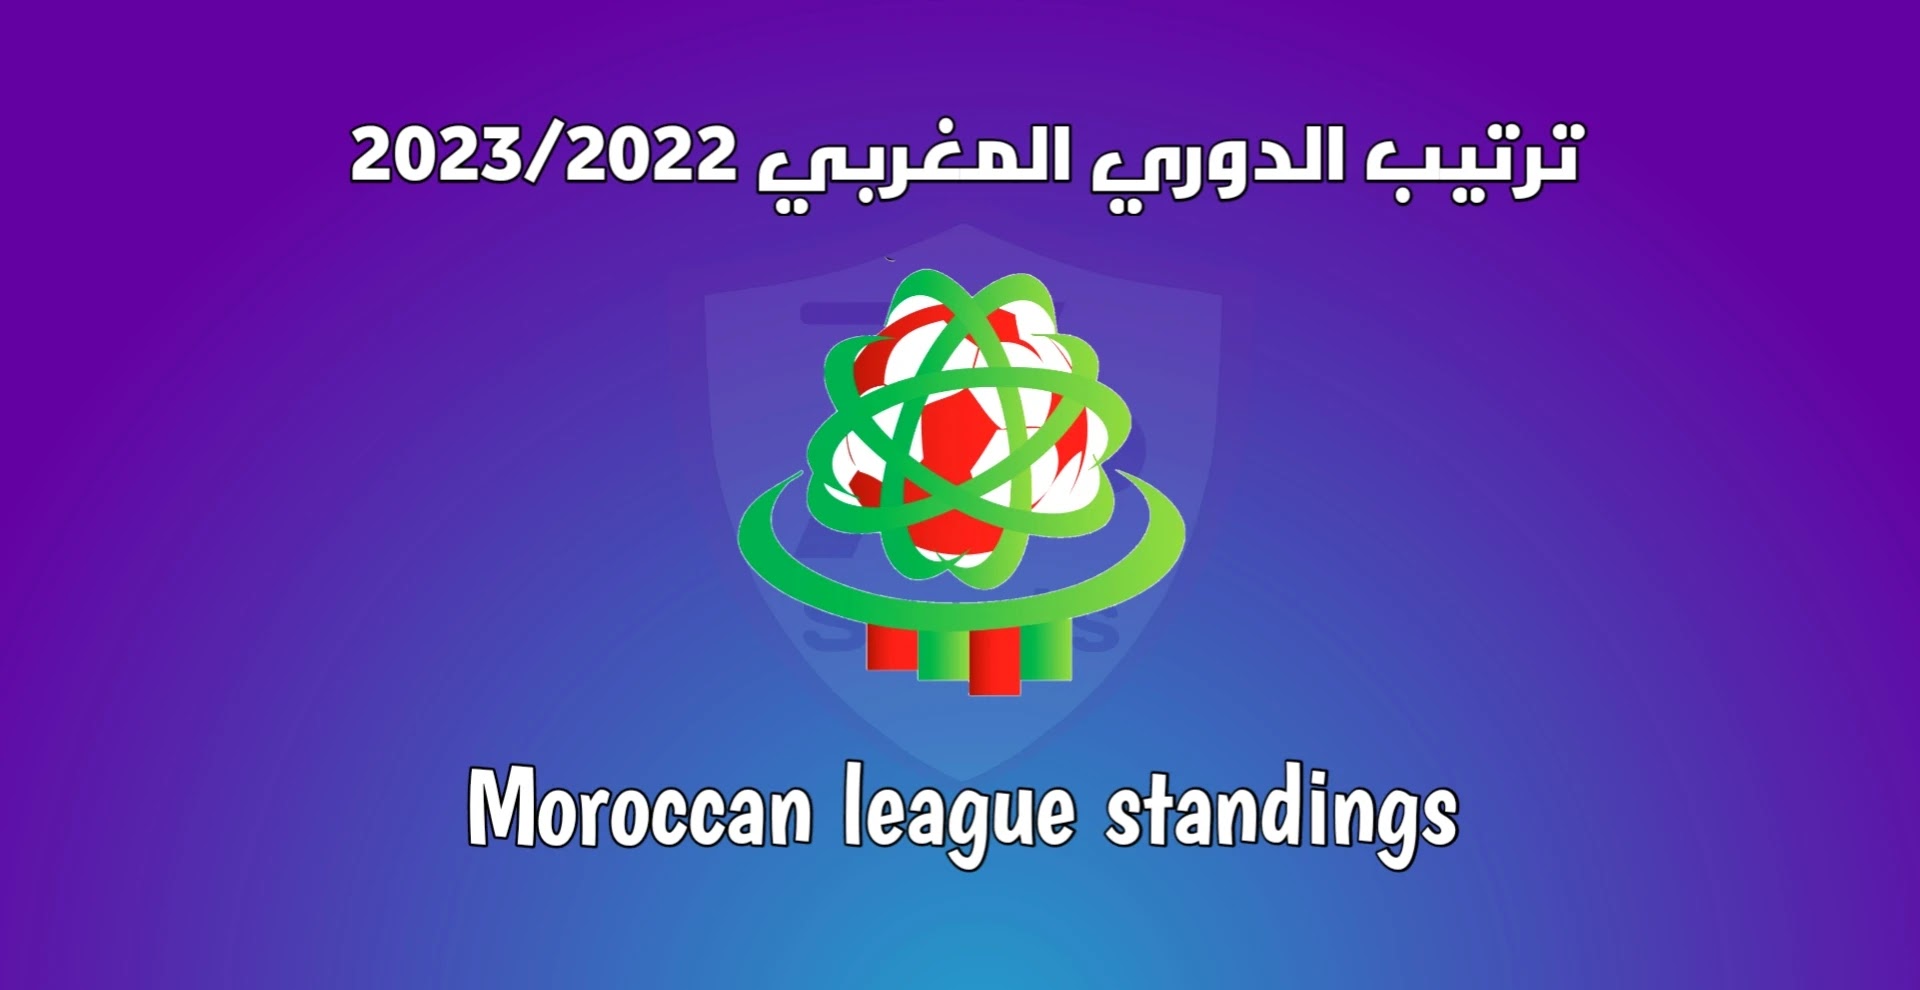 Moroccan league standings